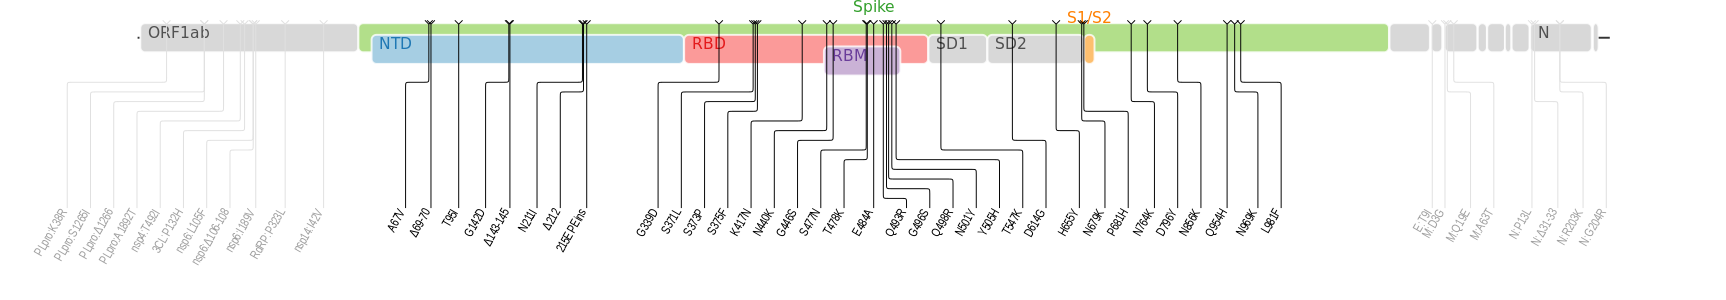 Omicron變異株的基因組序列如上圖所示